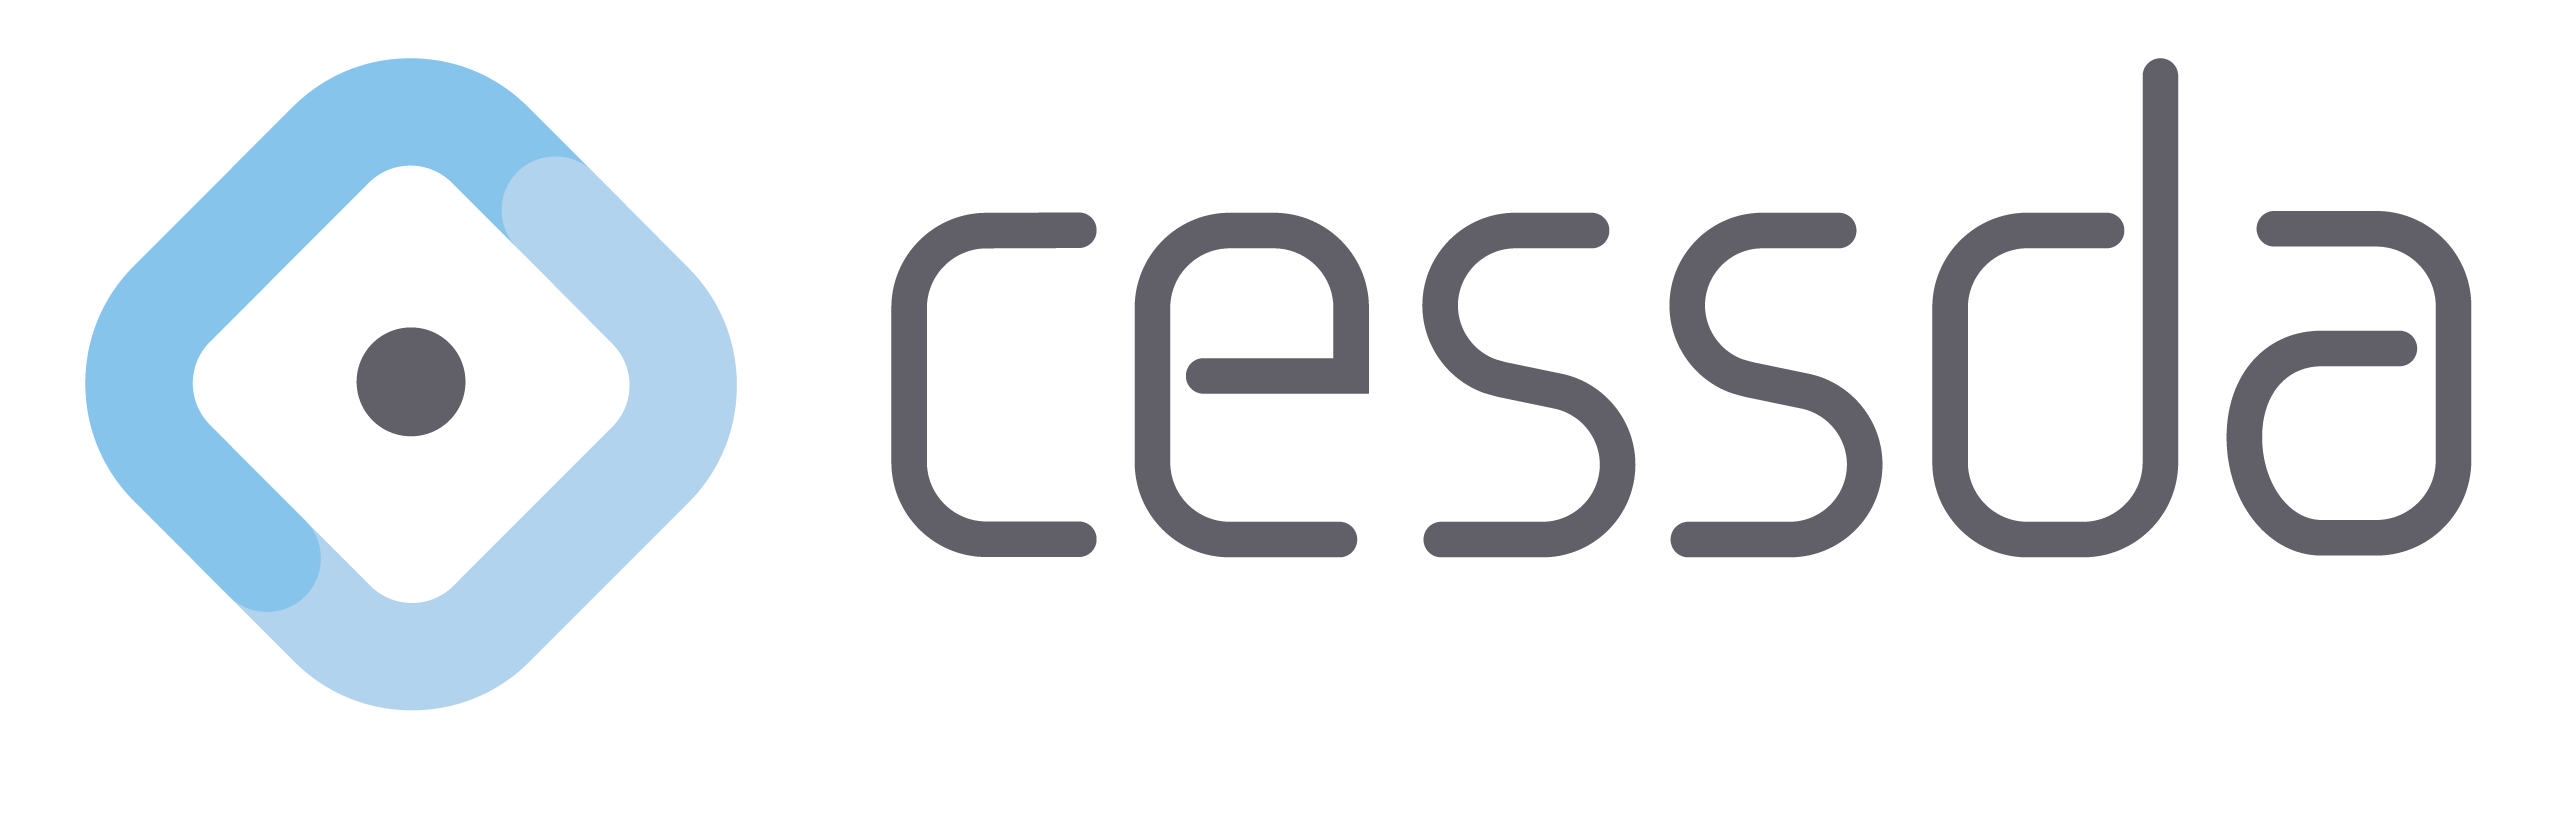 CESSDA logotyp